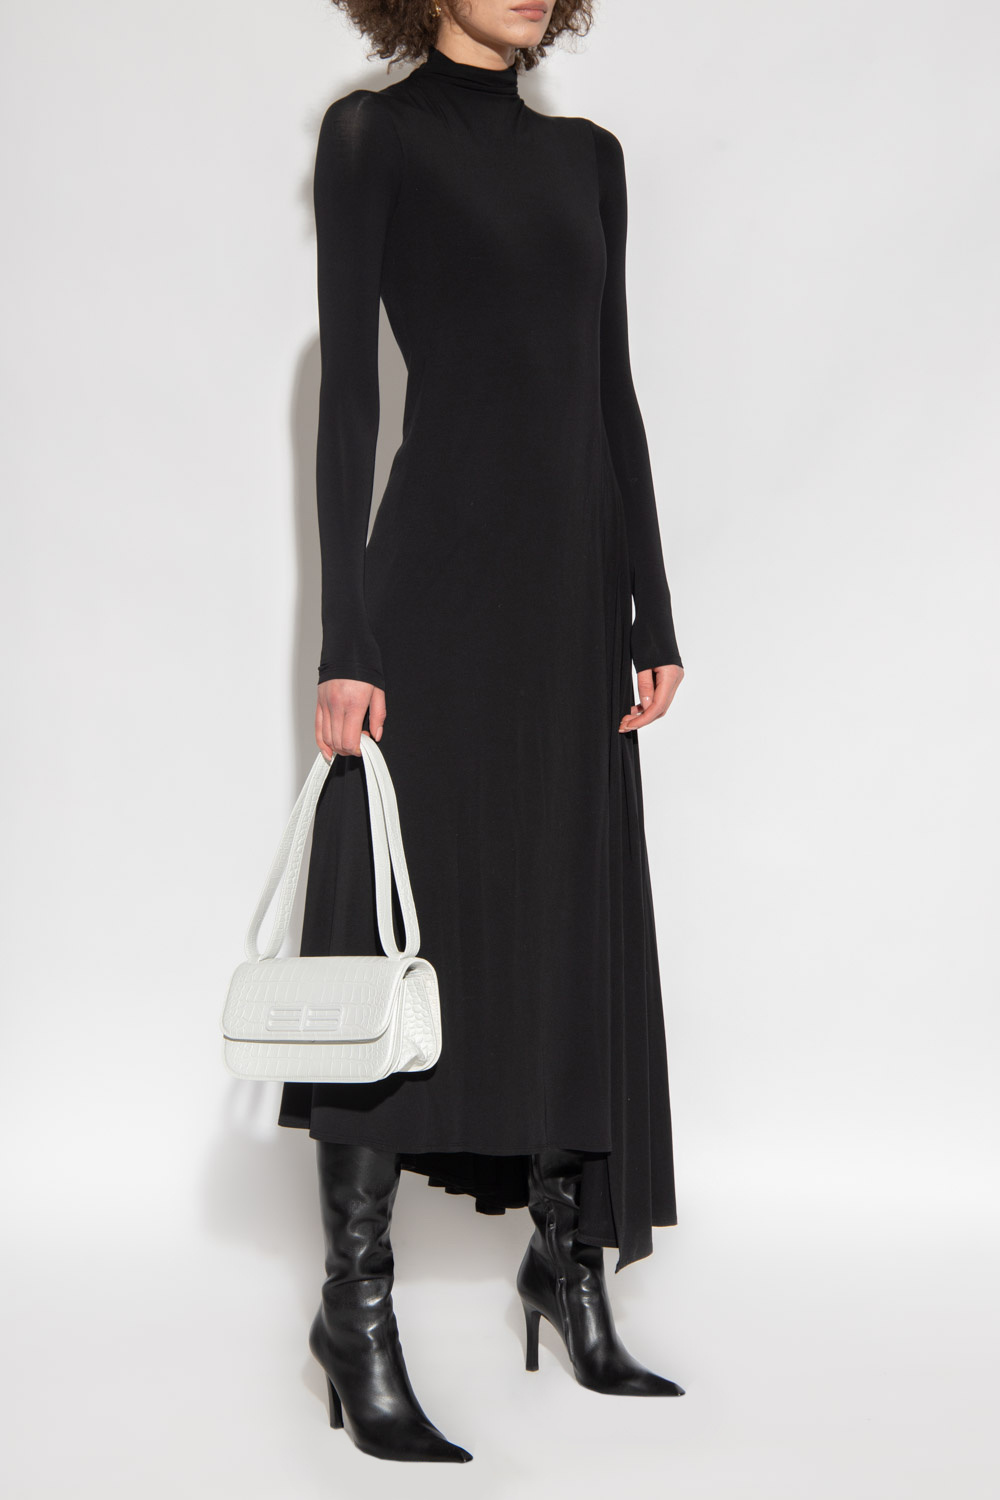 Balenciaga Dress with standing collar